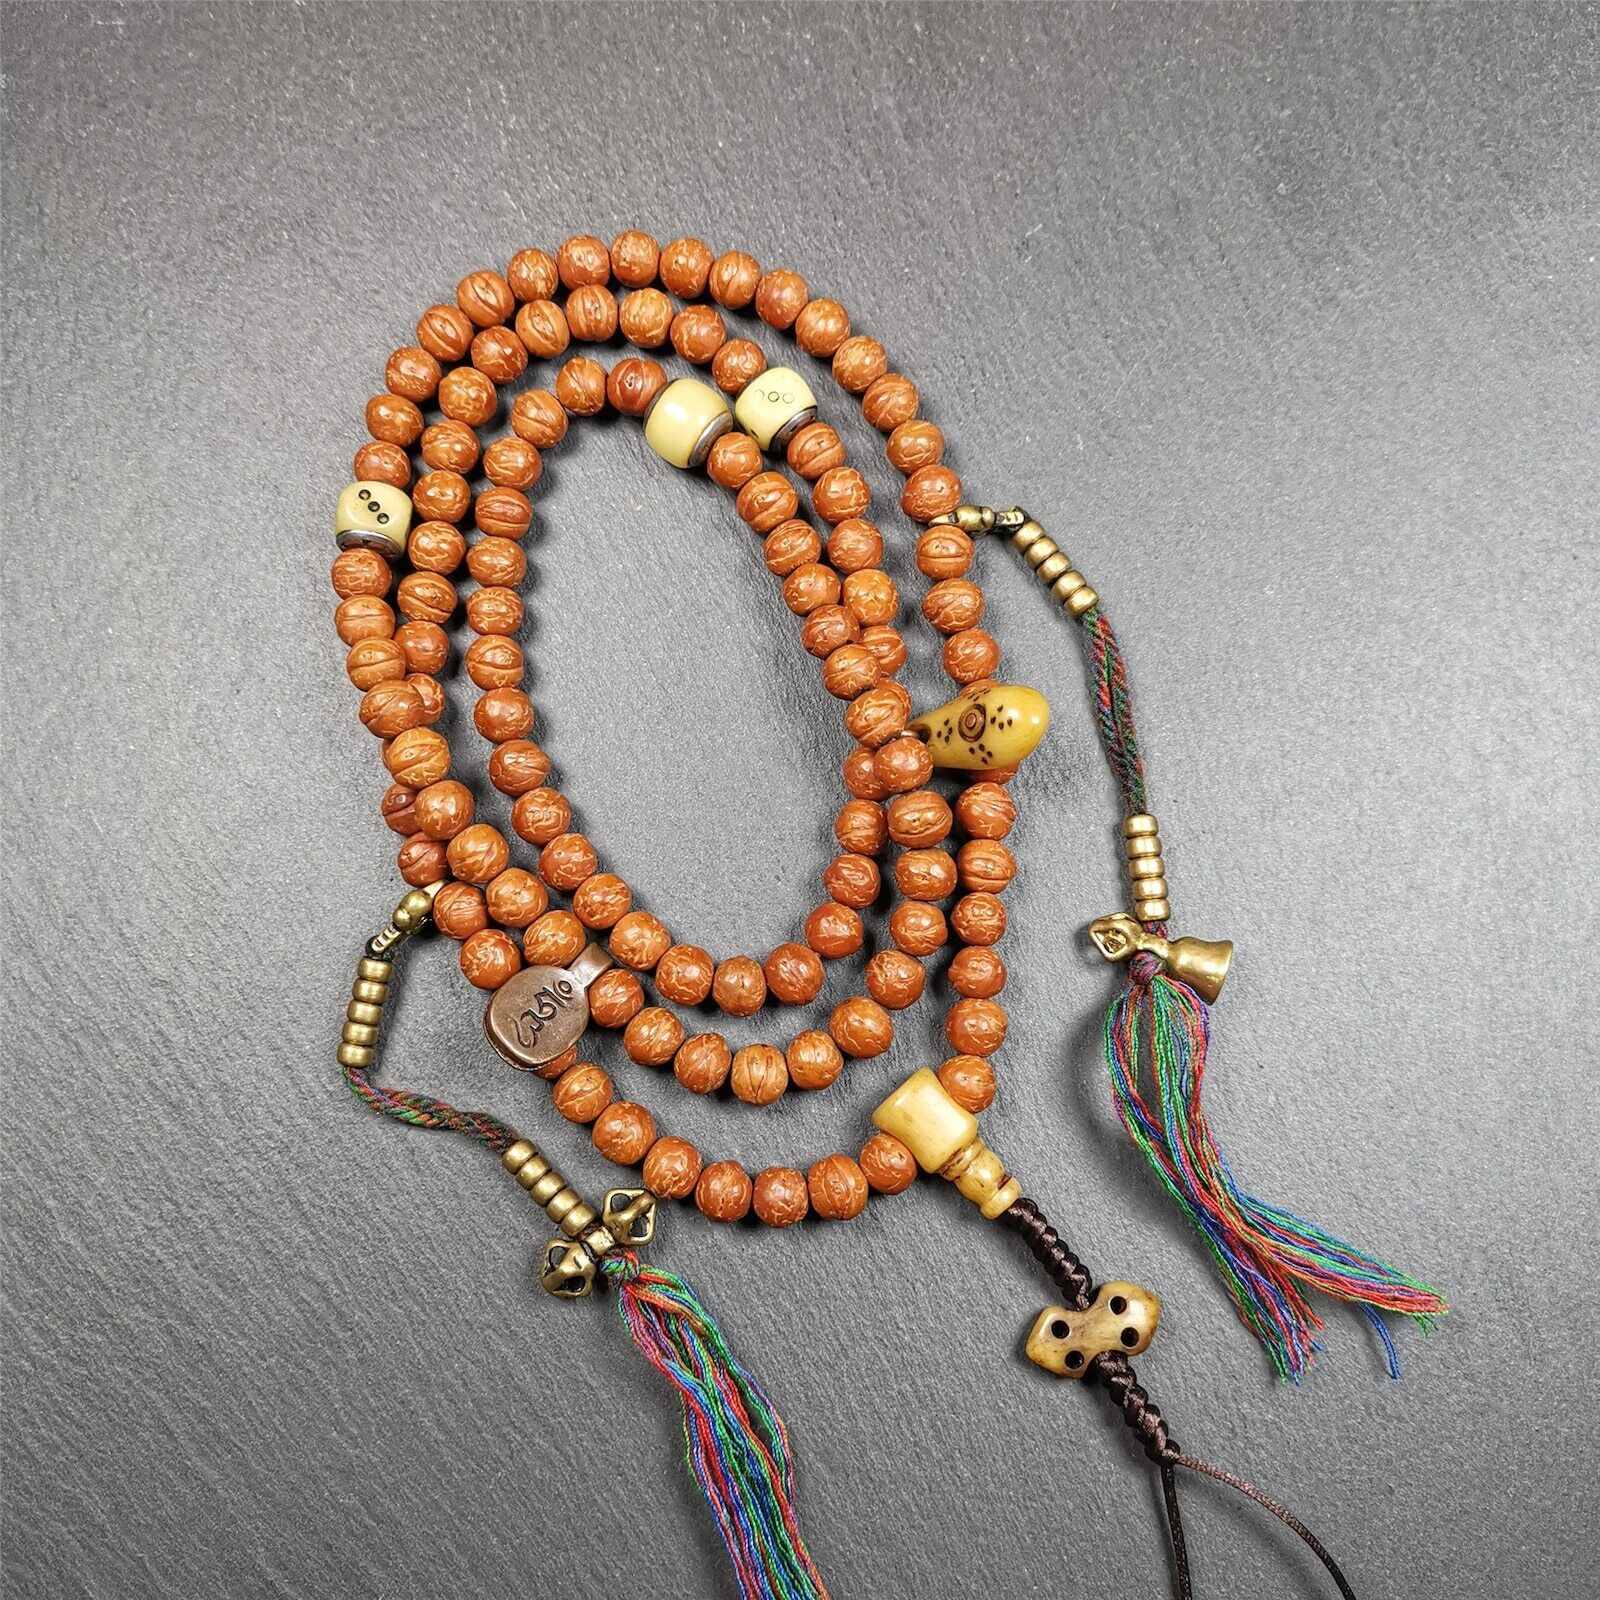 Gandhanra Old 108 Bodhi Seed Beads Mala,Prayer Beads Necklace for Meditation